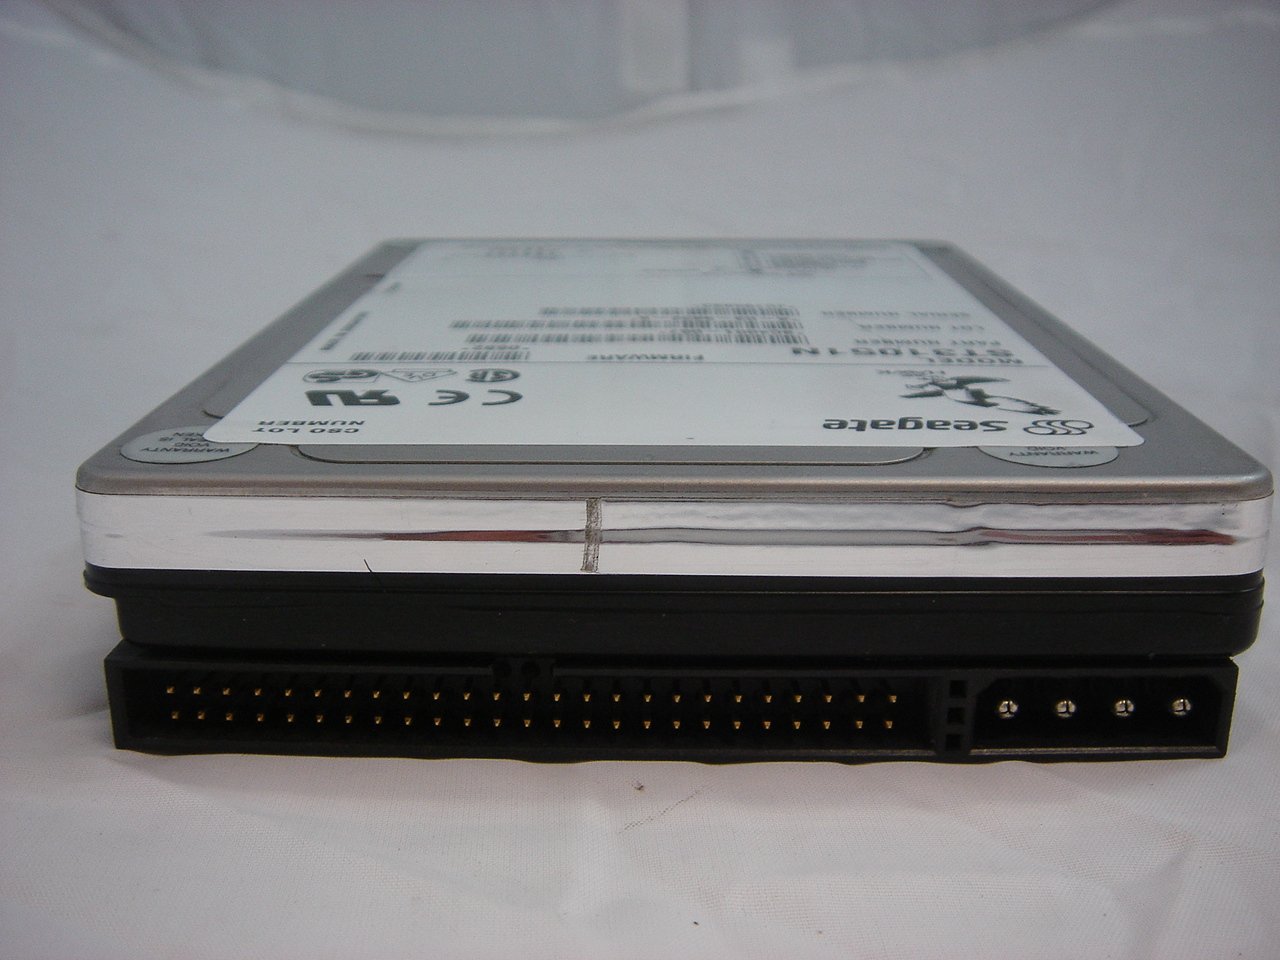 MC5432_9C4001-057_1.6GB SCSI 50pin Seagate HDD - Image3